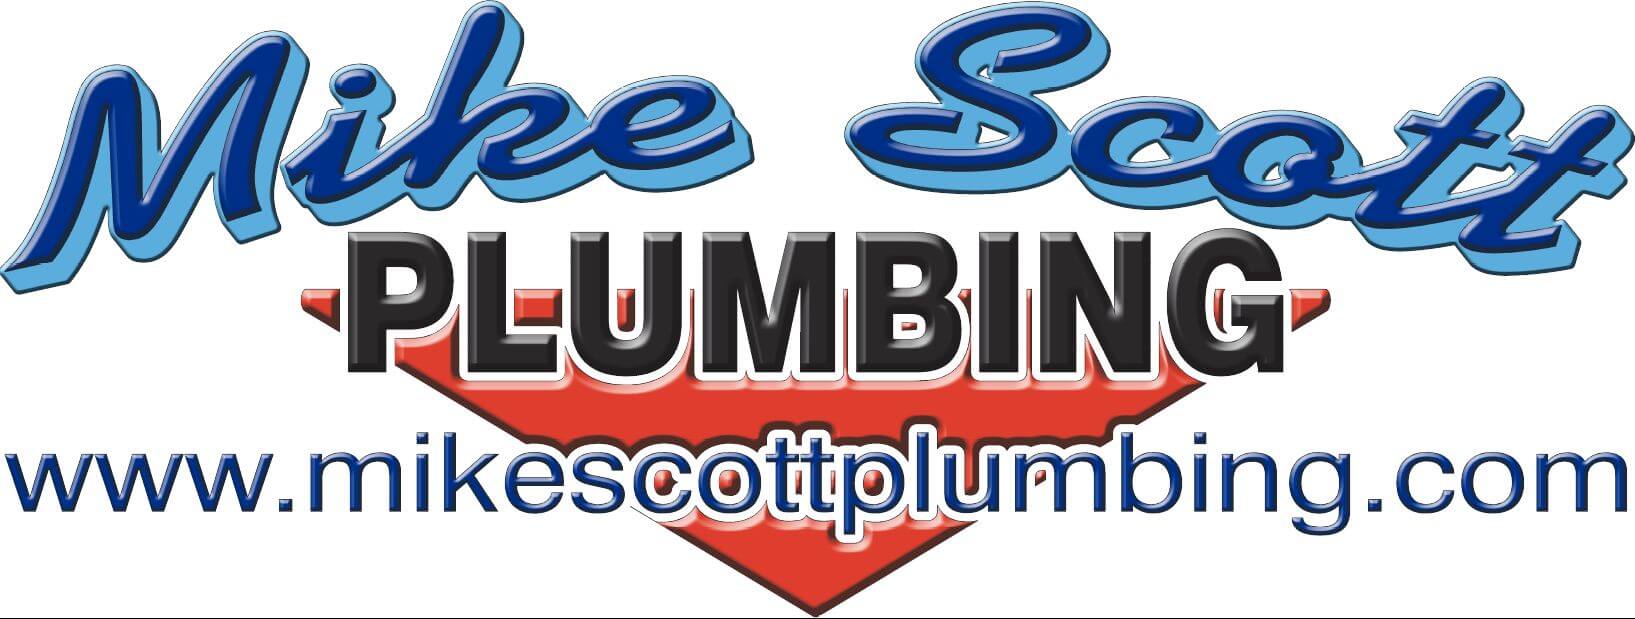 Mike Scott Plumbing logo 2